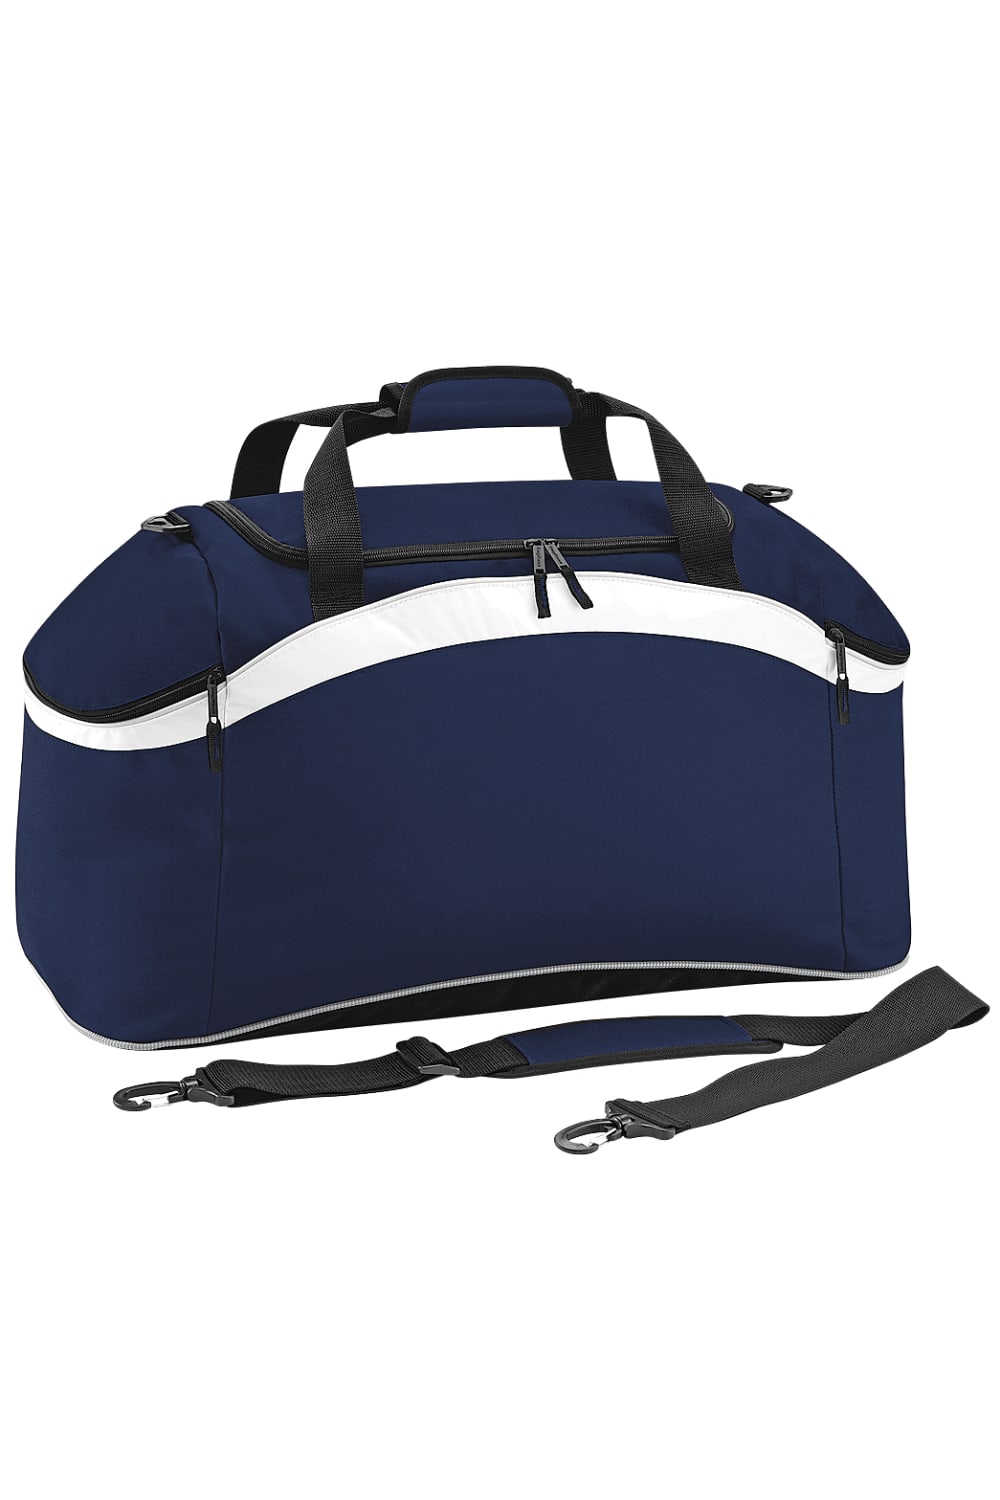 Teamwear Sport Holdall/Duffel Bag, 54 Liters - French Navy/ White